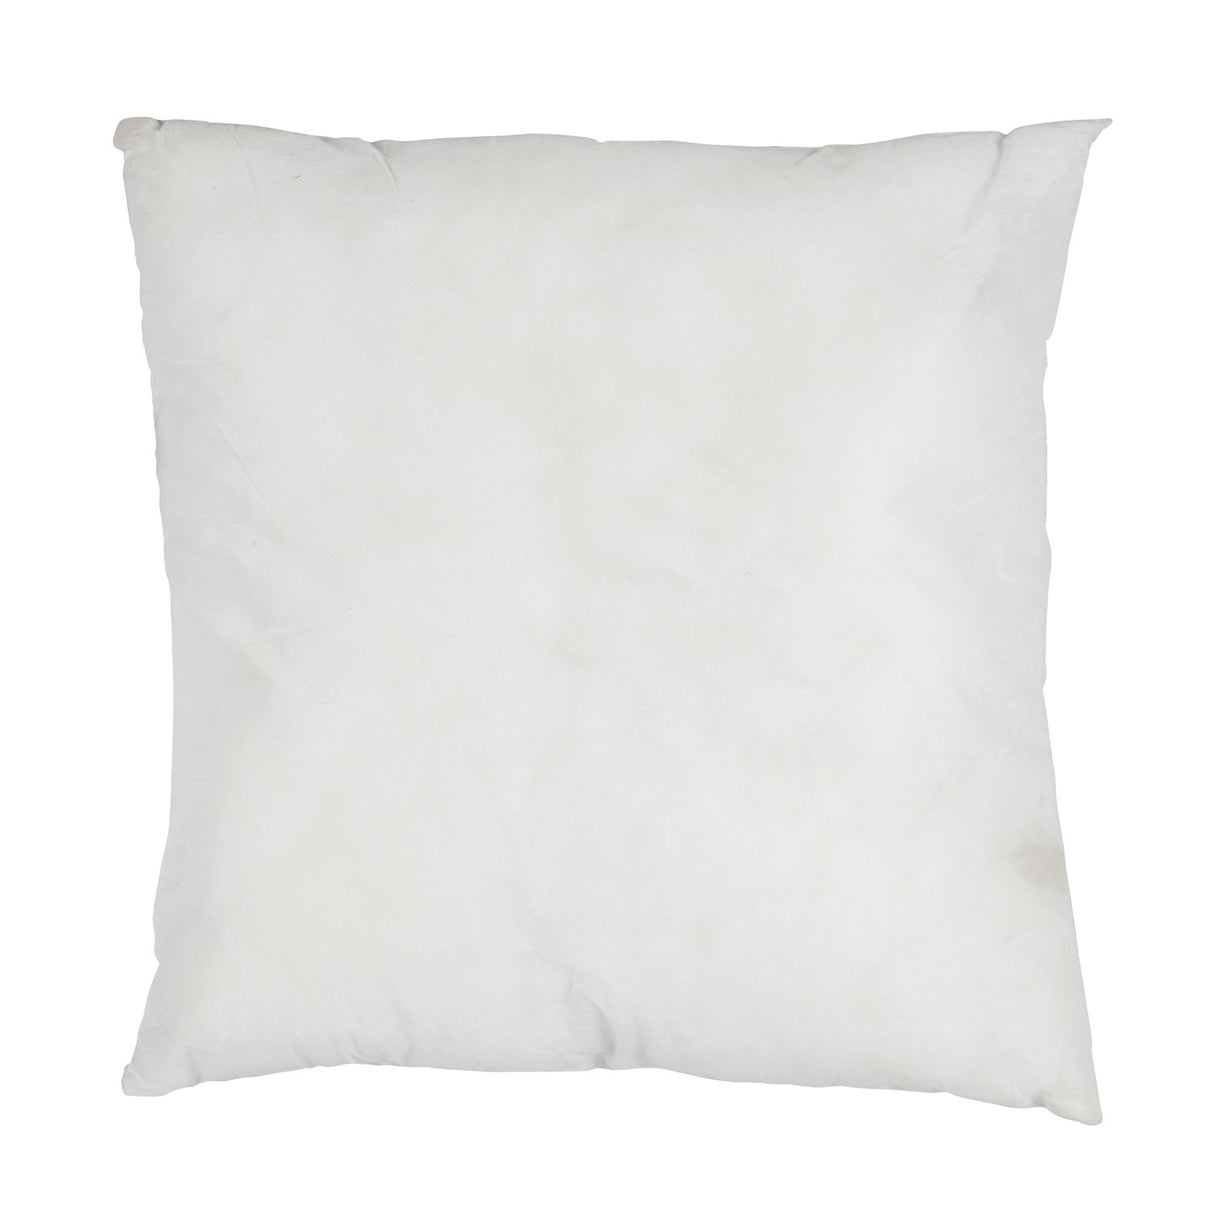 18" Outdoor Pillow Form